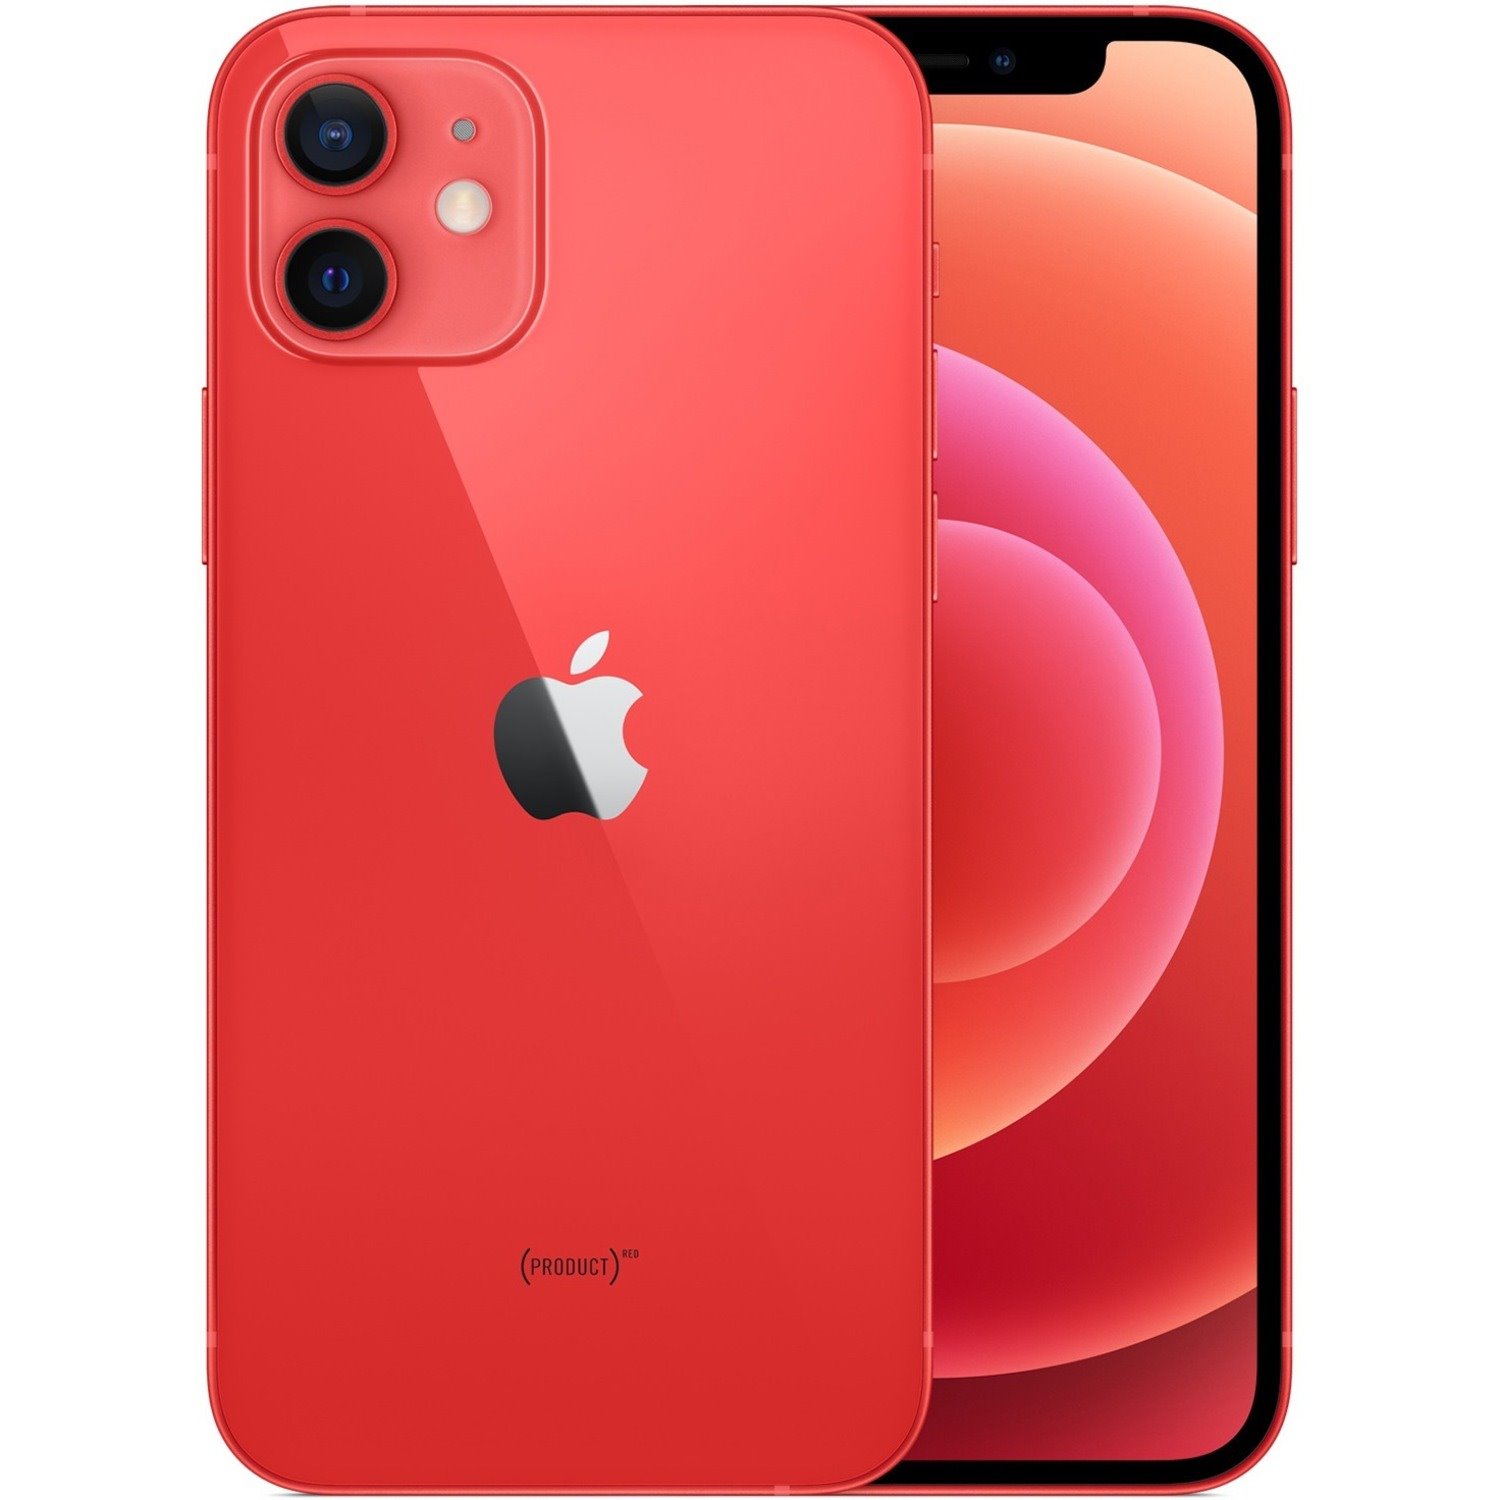 Apple iPhone 12 mini 128 GB Smartphone - 13.7 cm (5.4") OLED Full HD Plus 2340 x 1080 - Hexa-core (6 Core) - iOS 14 - 5G - Red